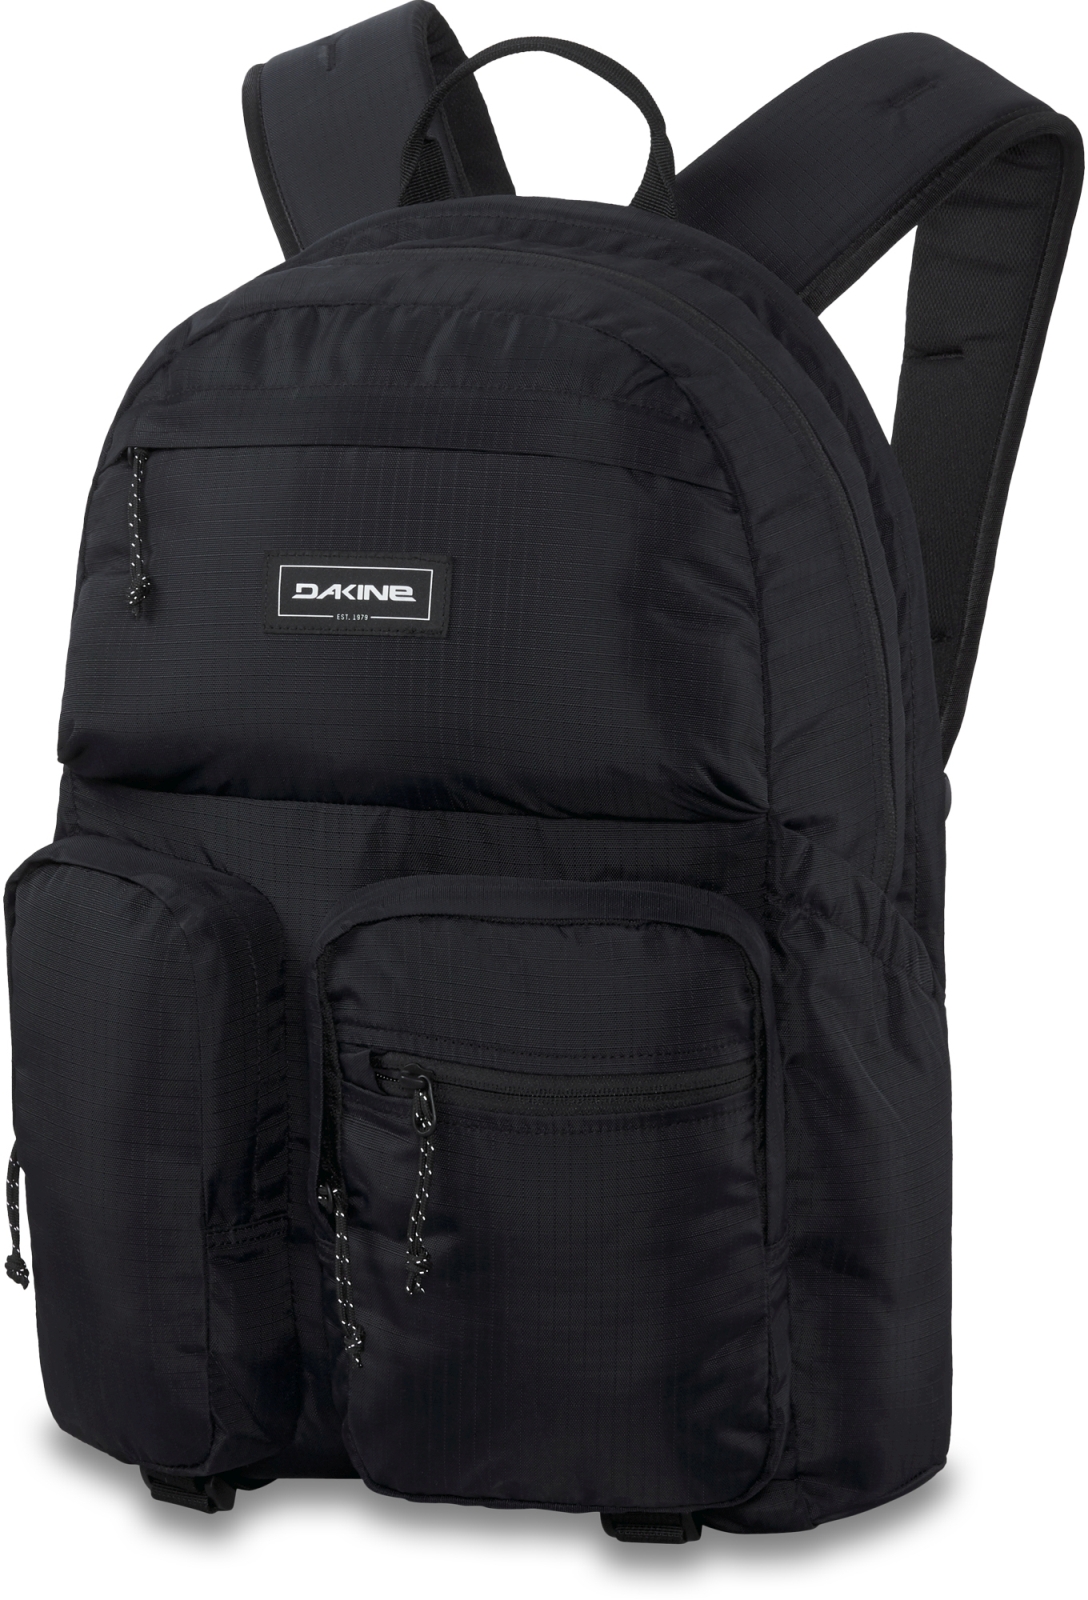 Dakine Method Backpack Dlx 28L - black ripstop